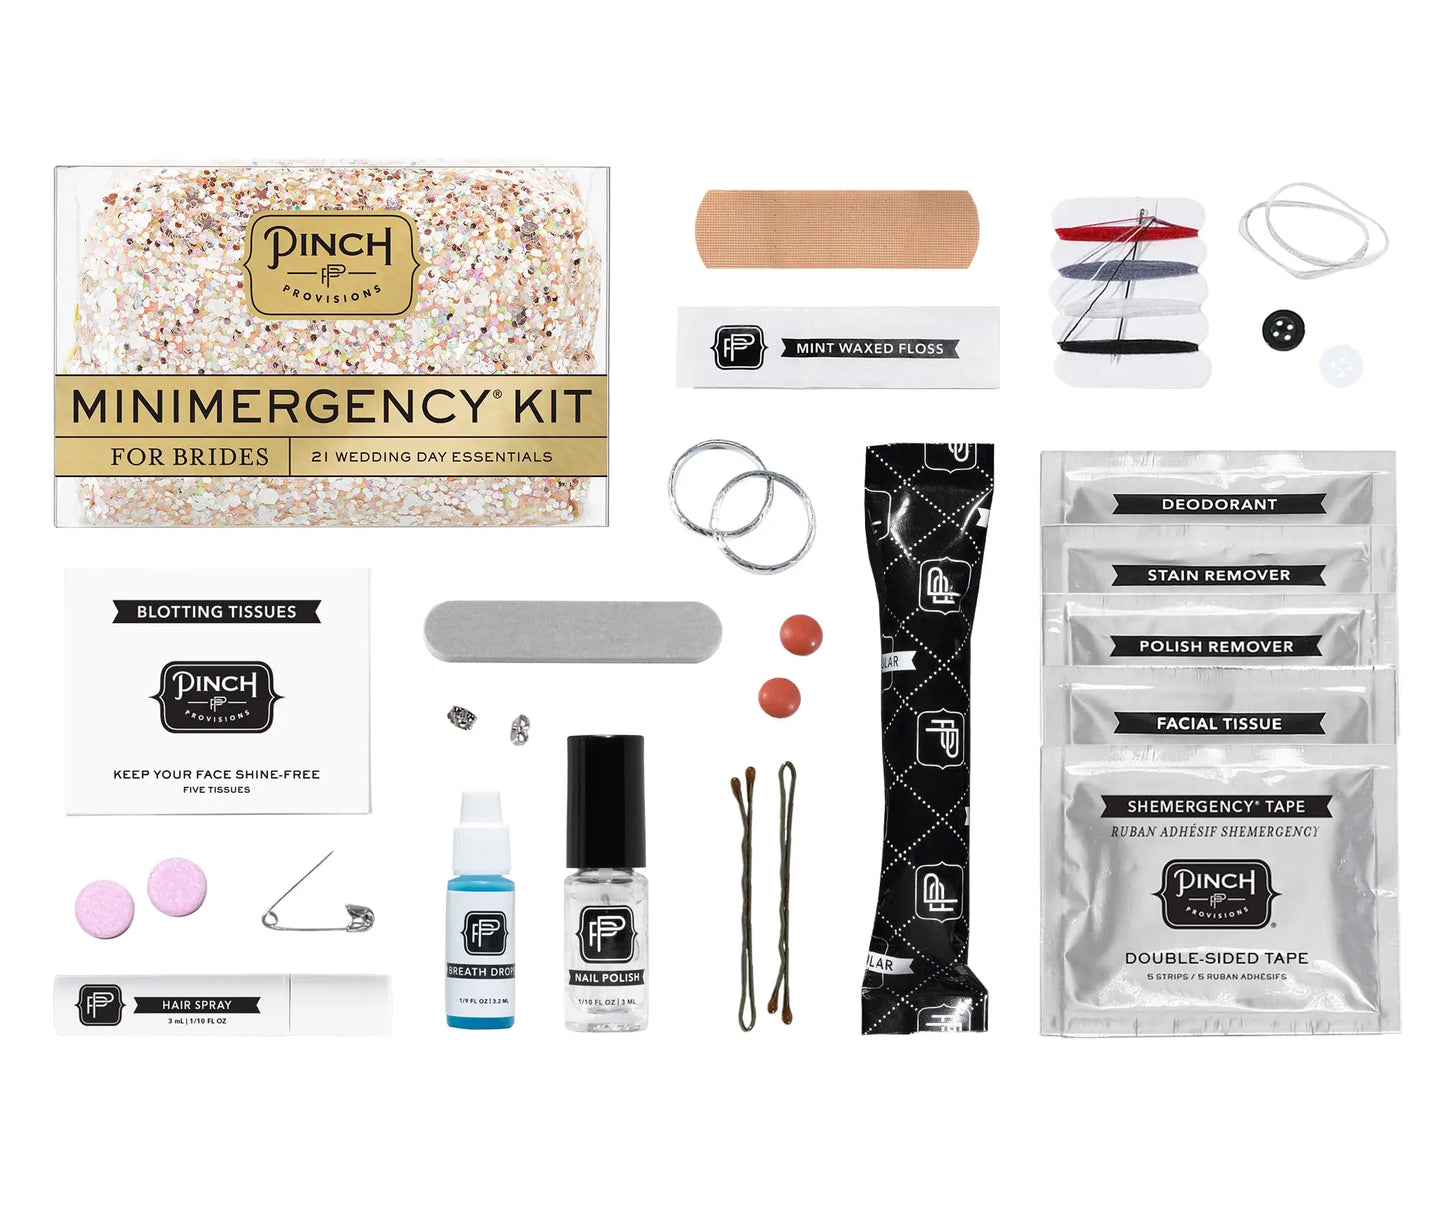 Minimergency Kit for Brides